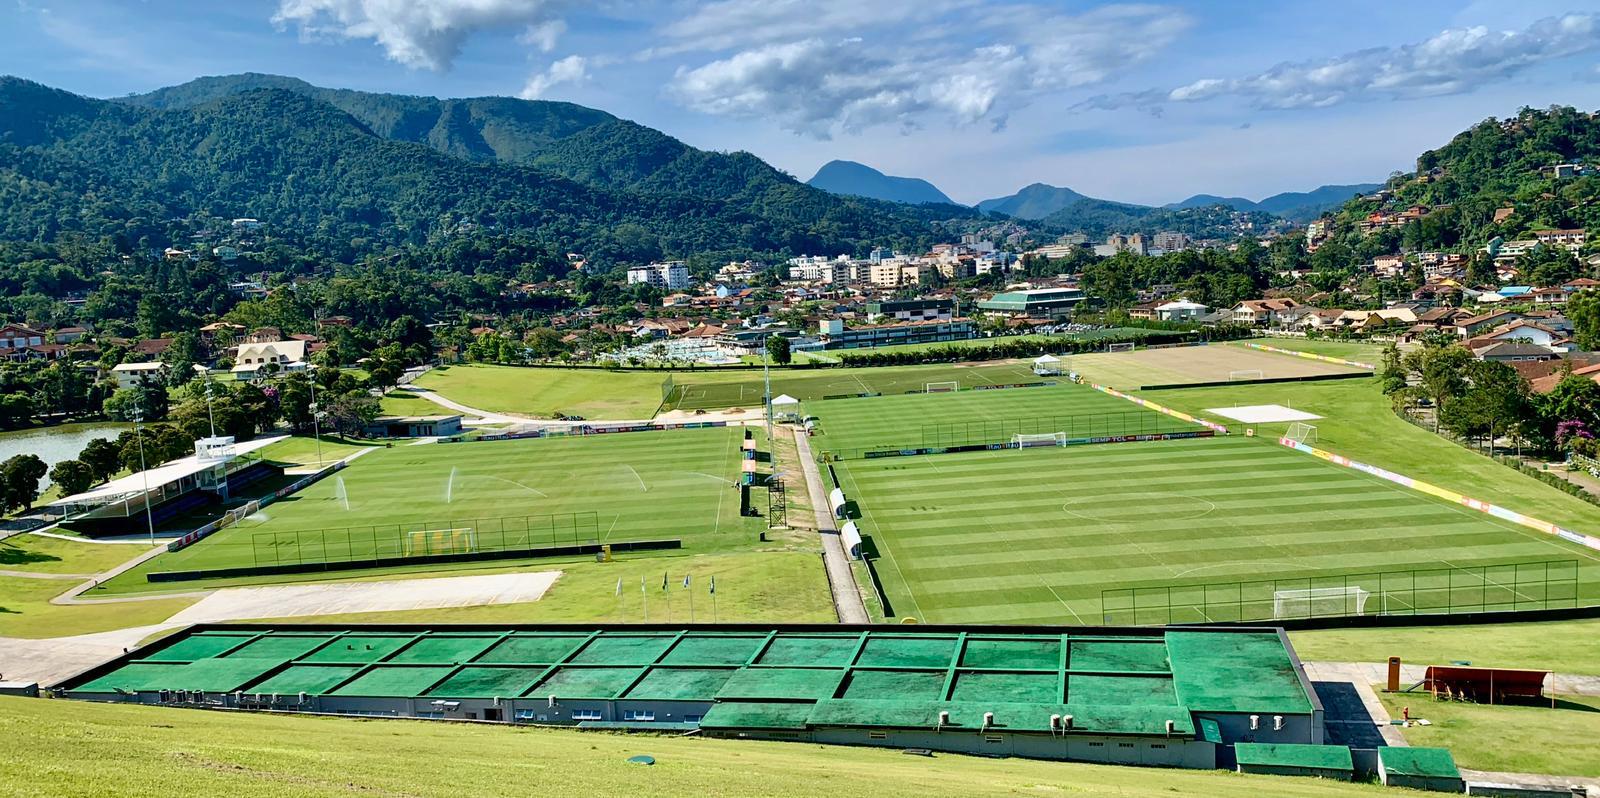 Granja Comary football complex in Brazil 